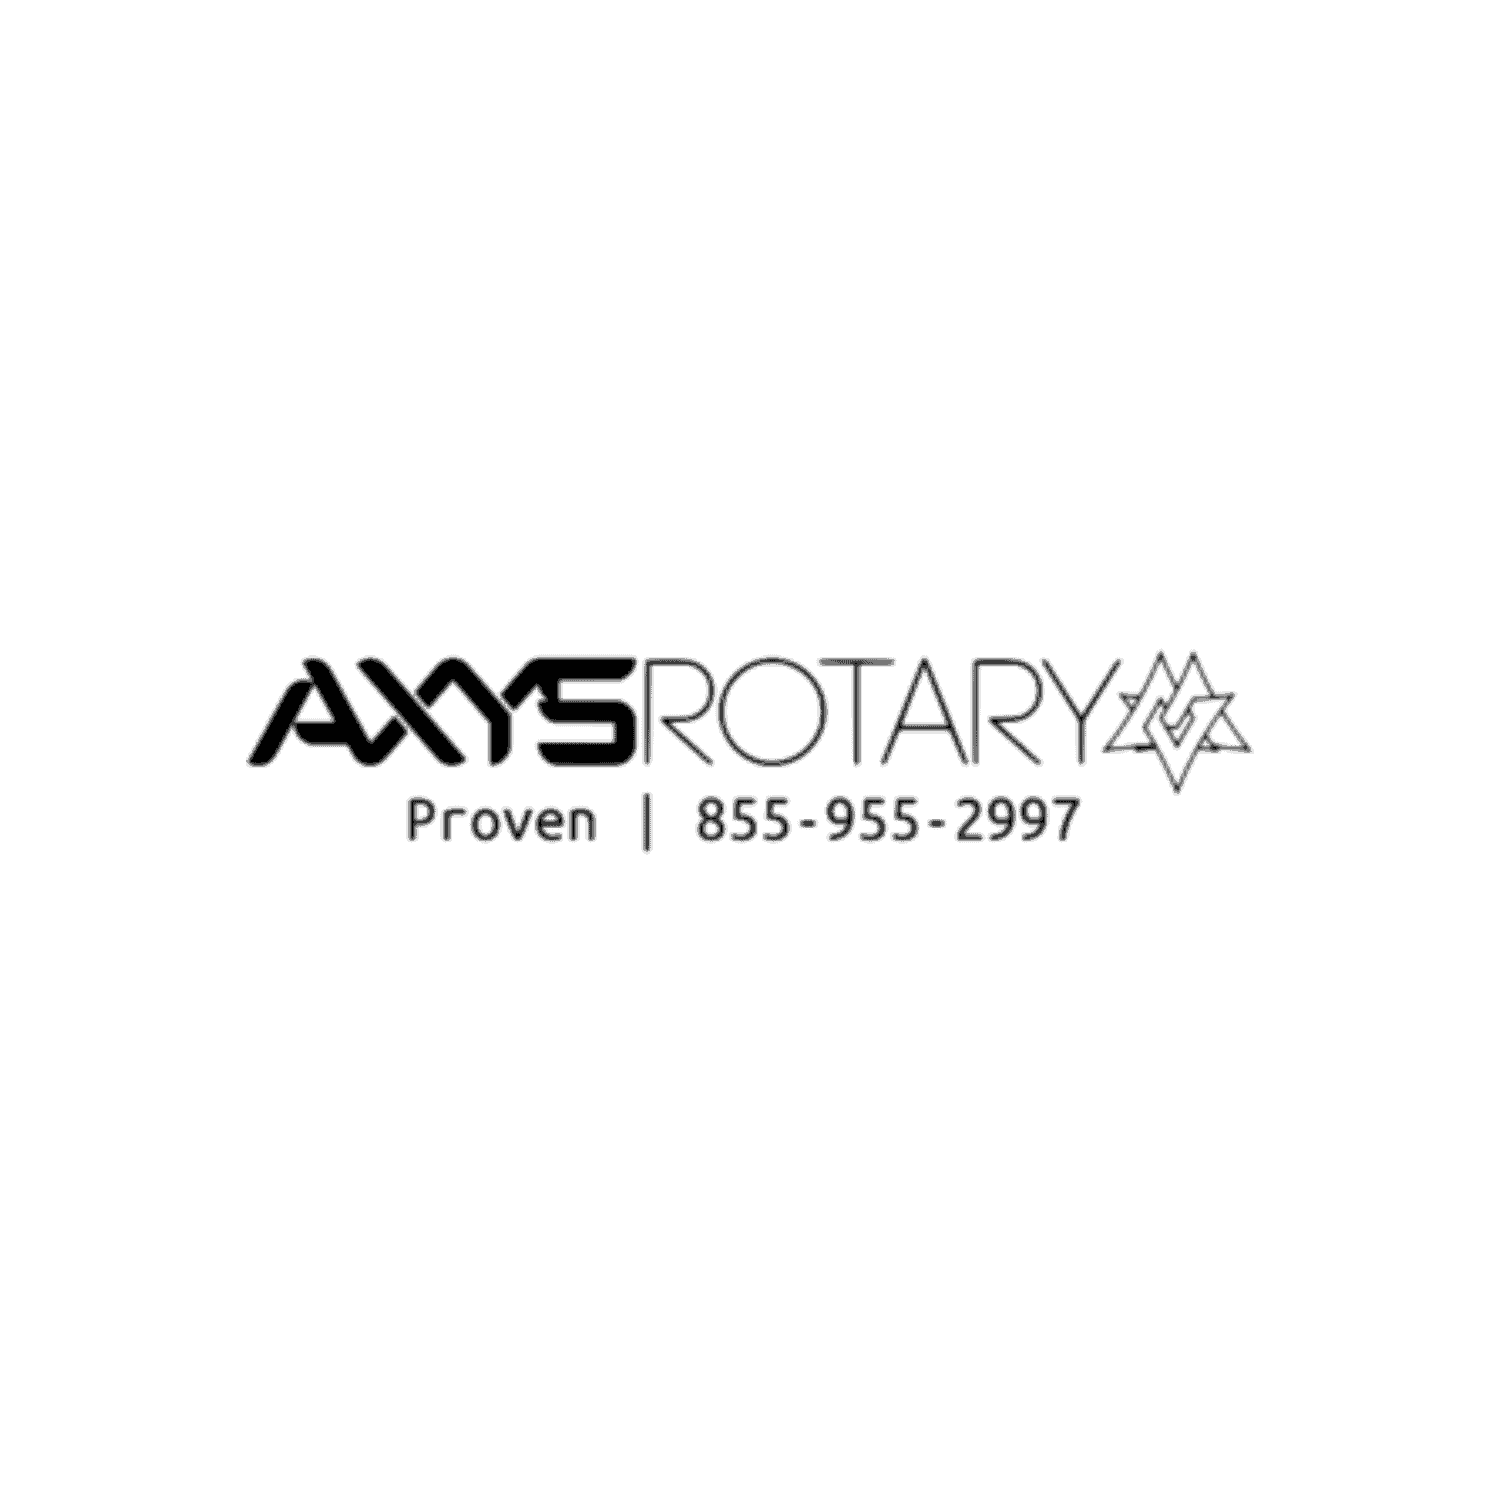 logo of axys rotary